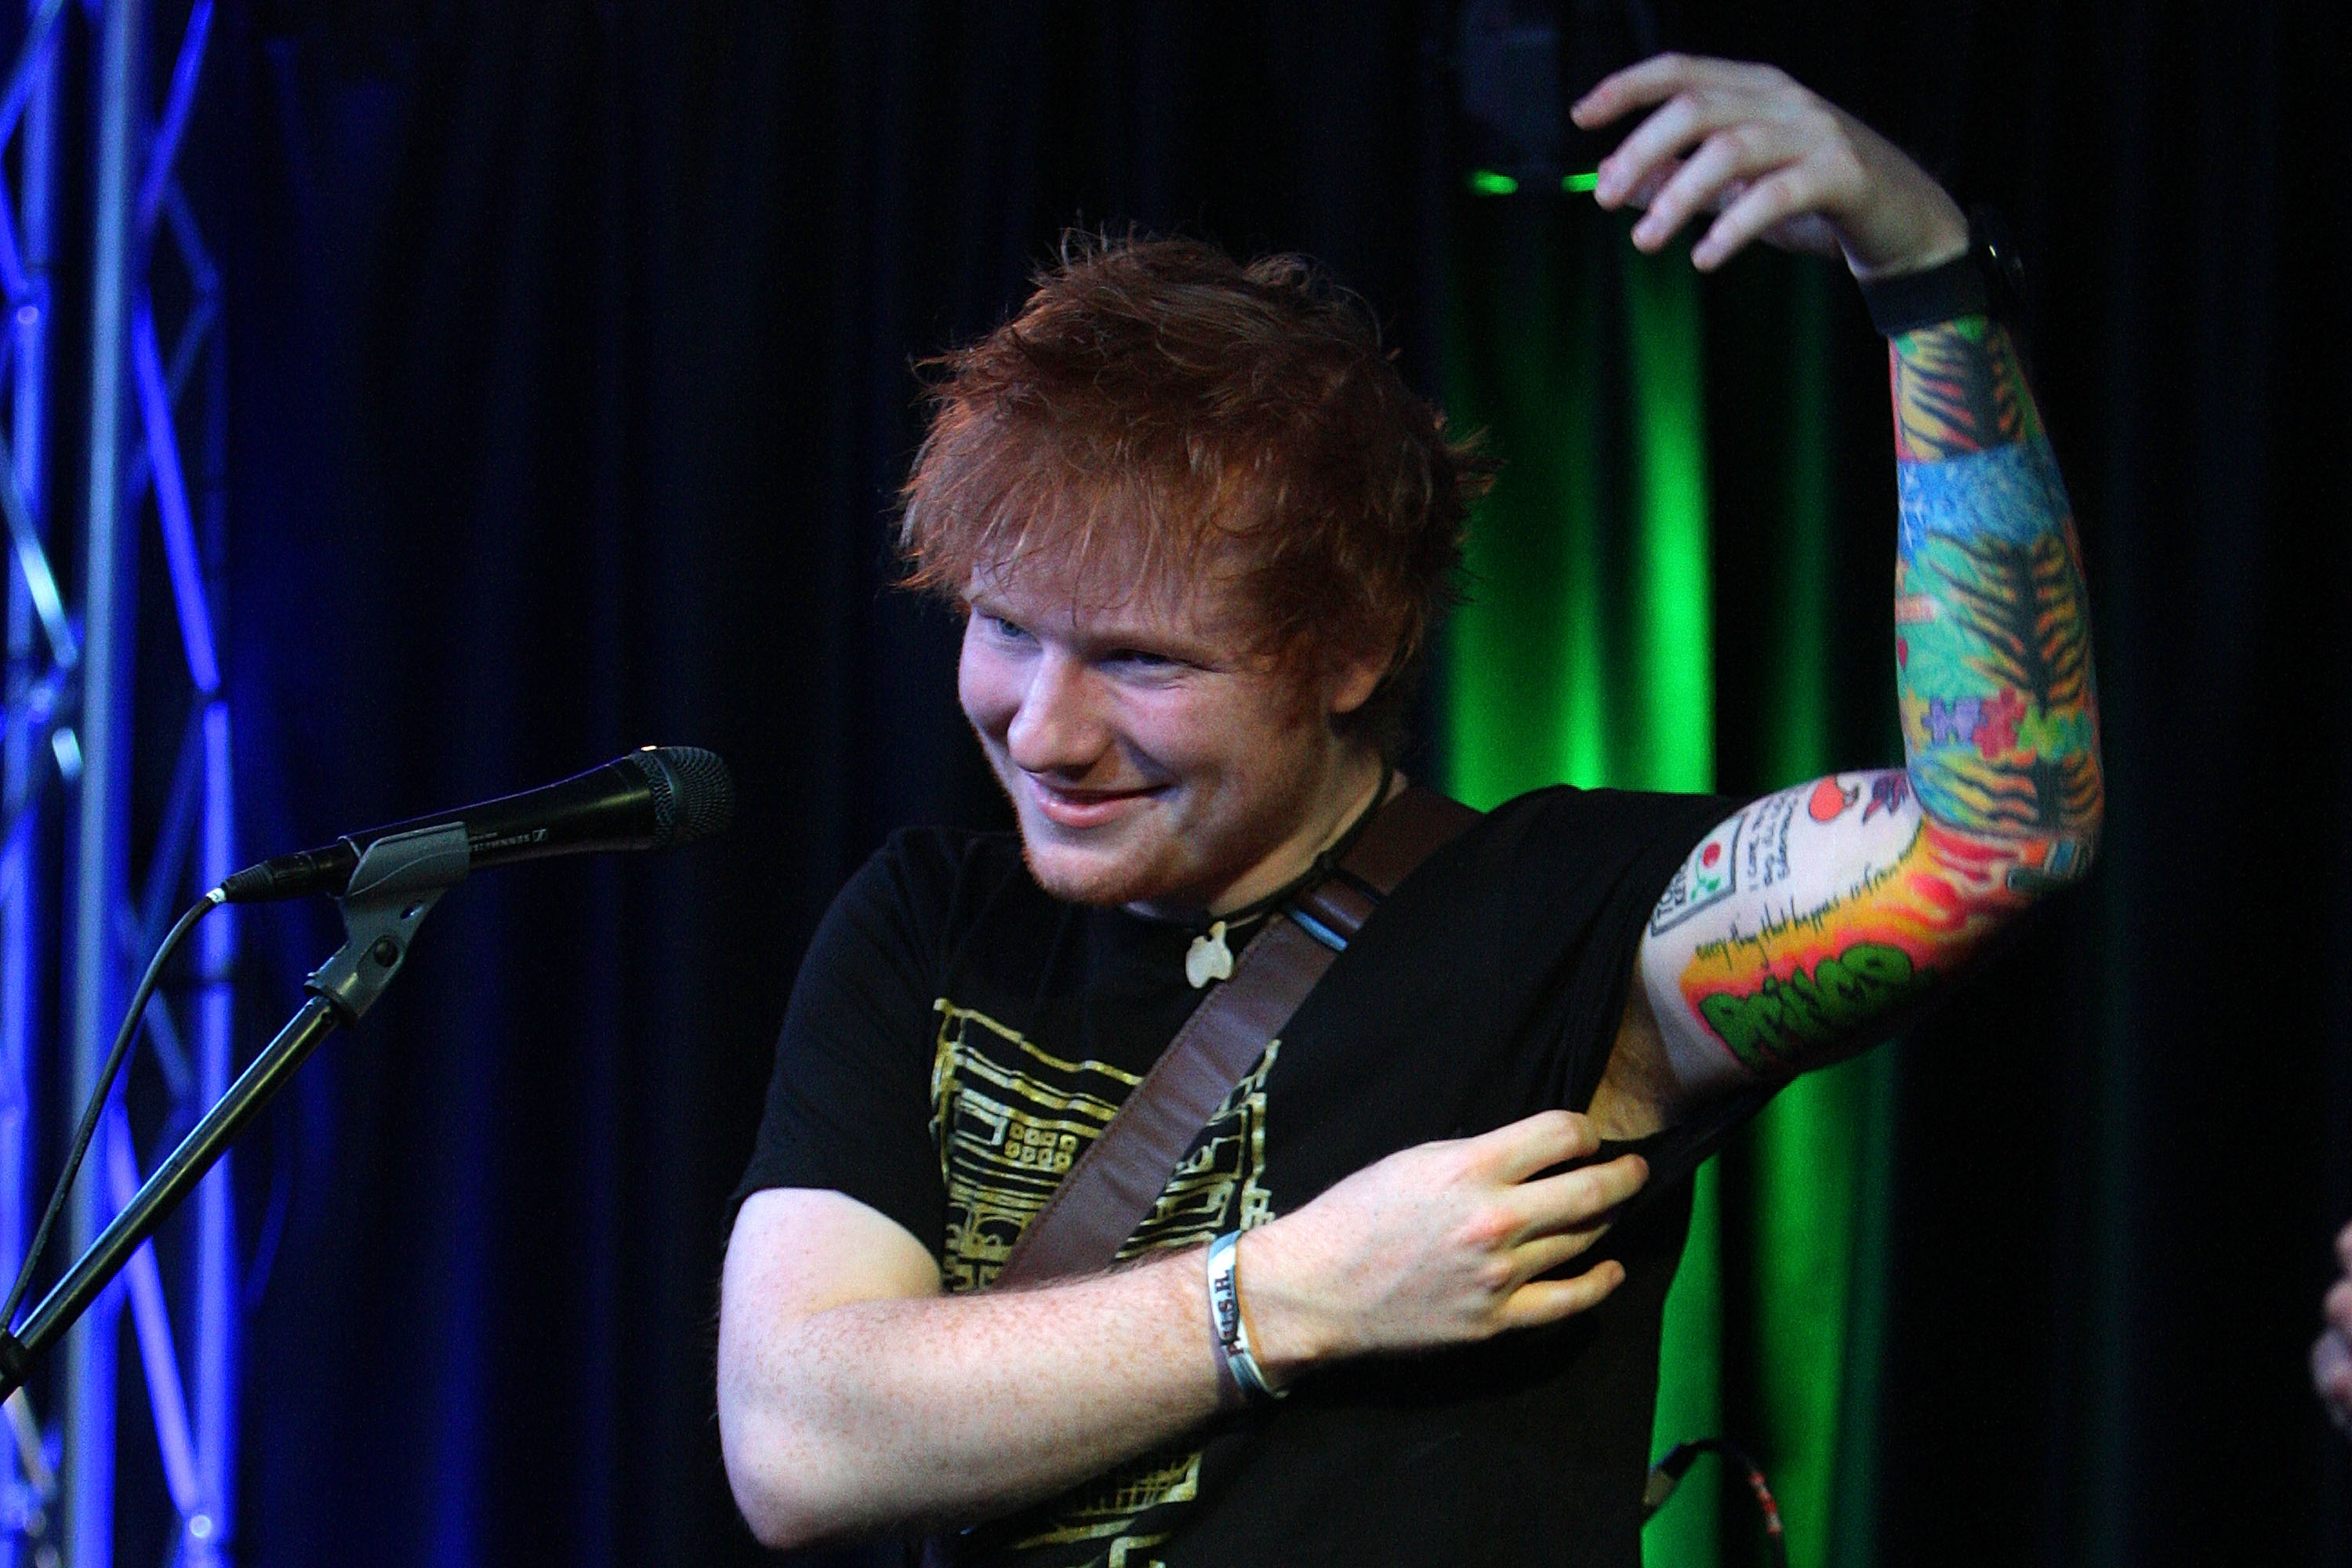 Los tatuajes de Ed Sheeran apestan, según su propio tatuador